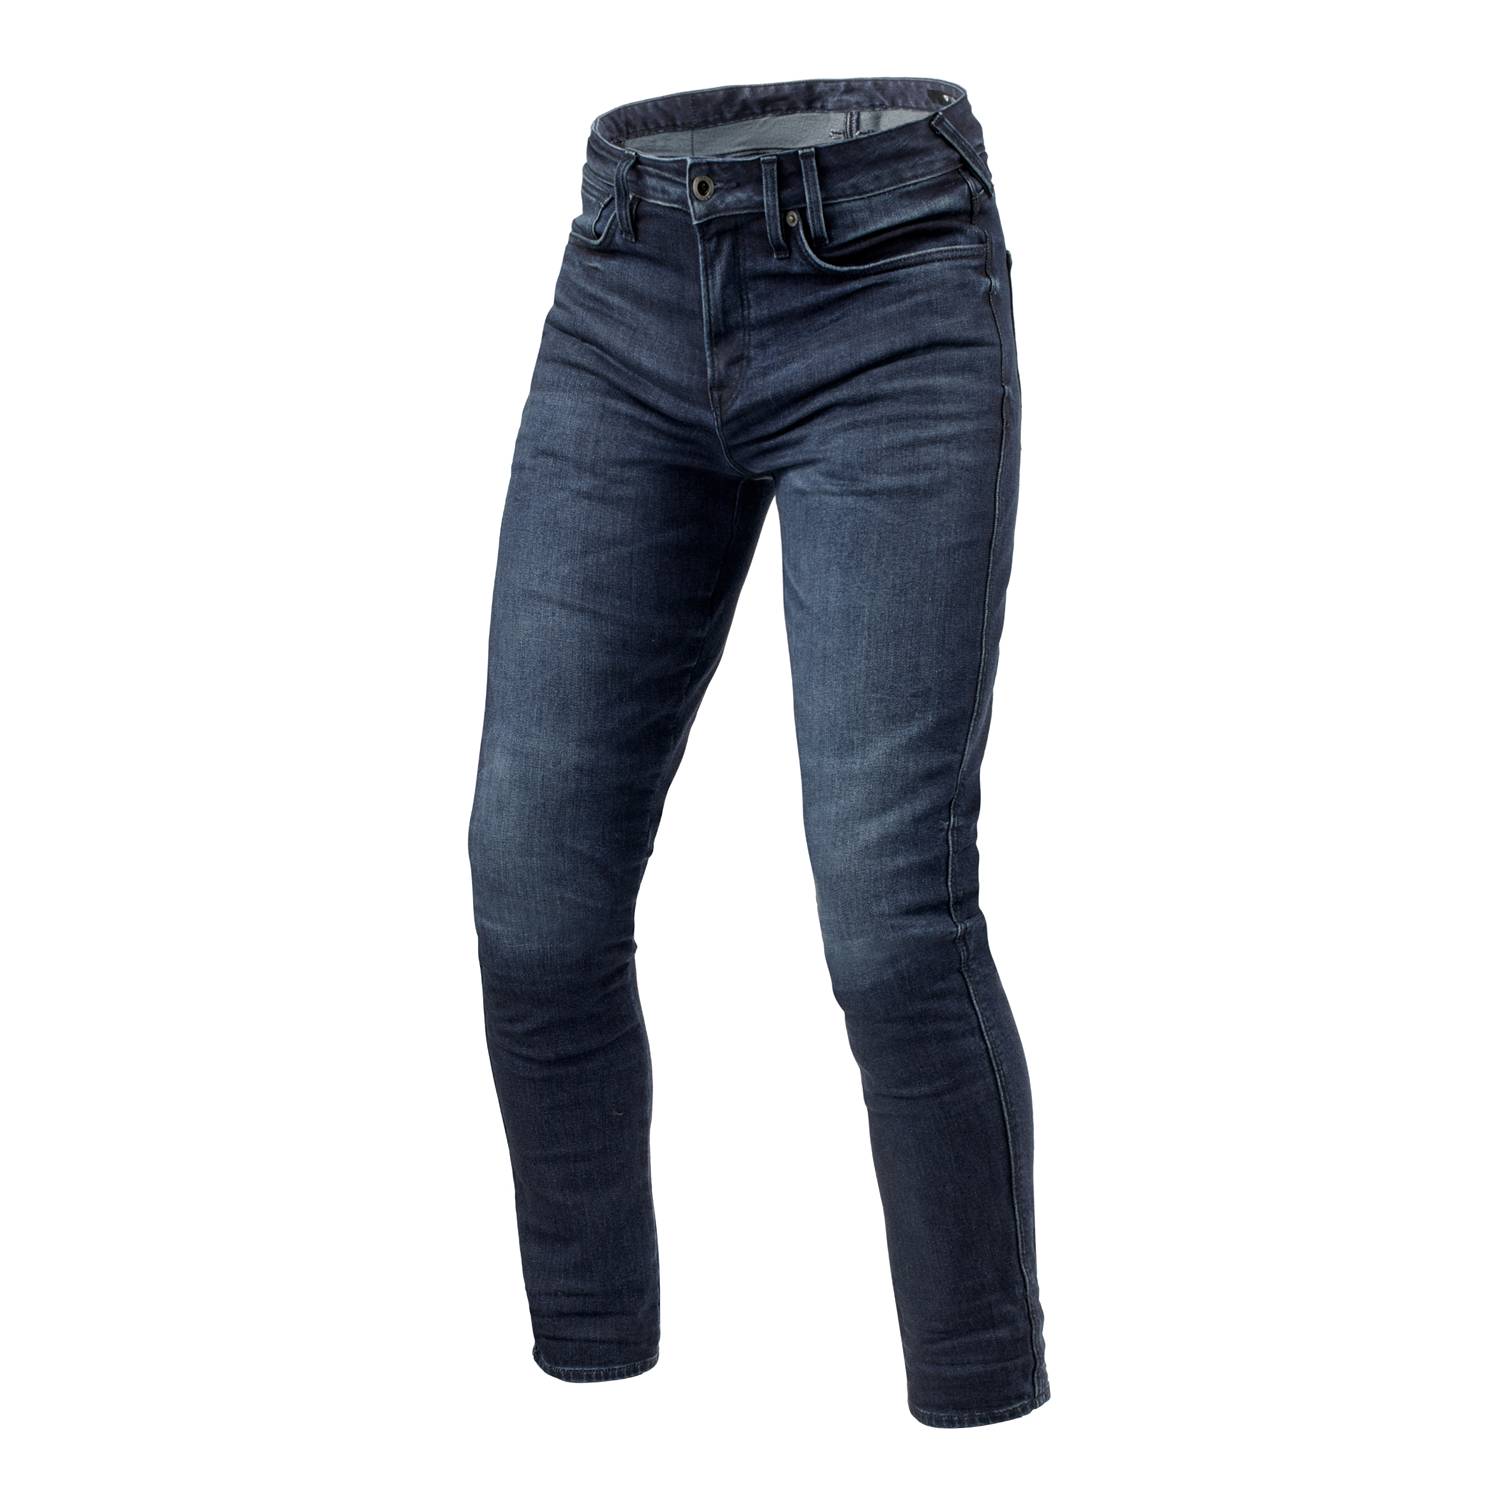 Image of REV'IT! Jeans Carlin SK Dark Blue Used L36 Motorcycle Jeans Größe L36/W32